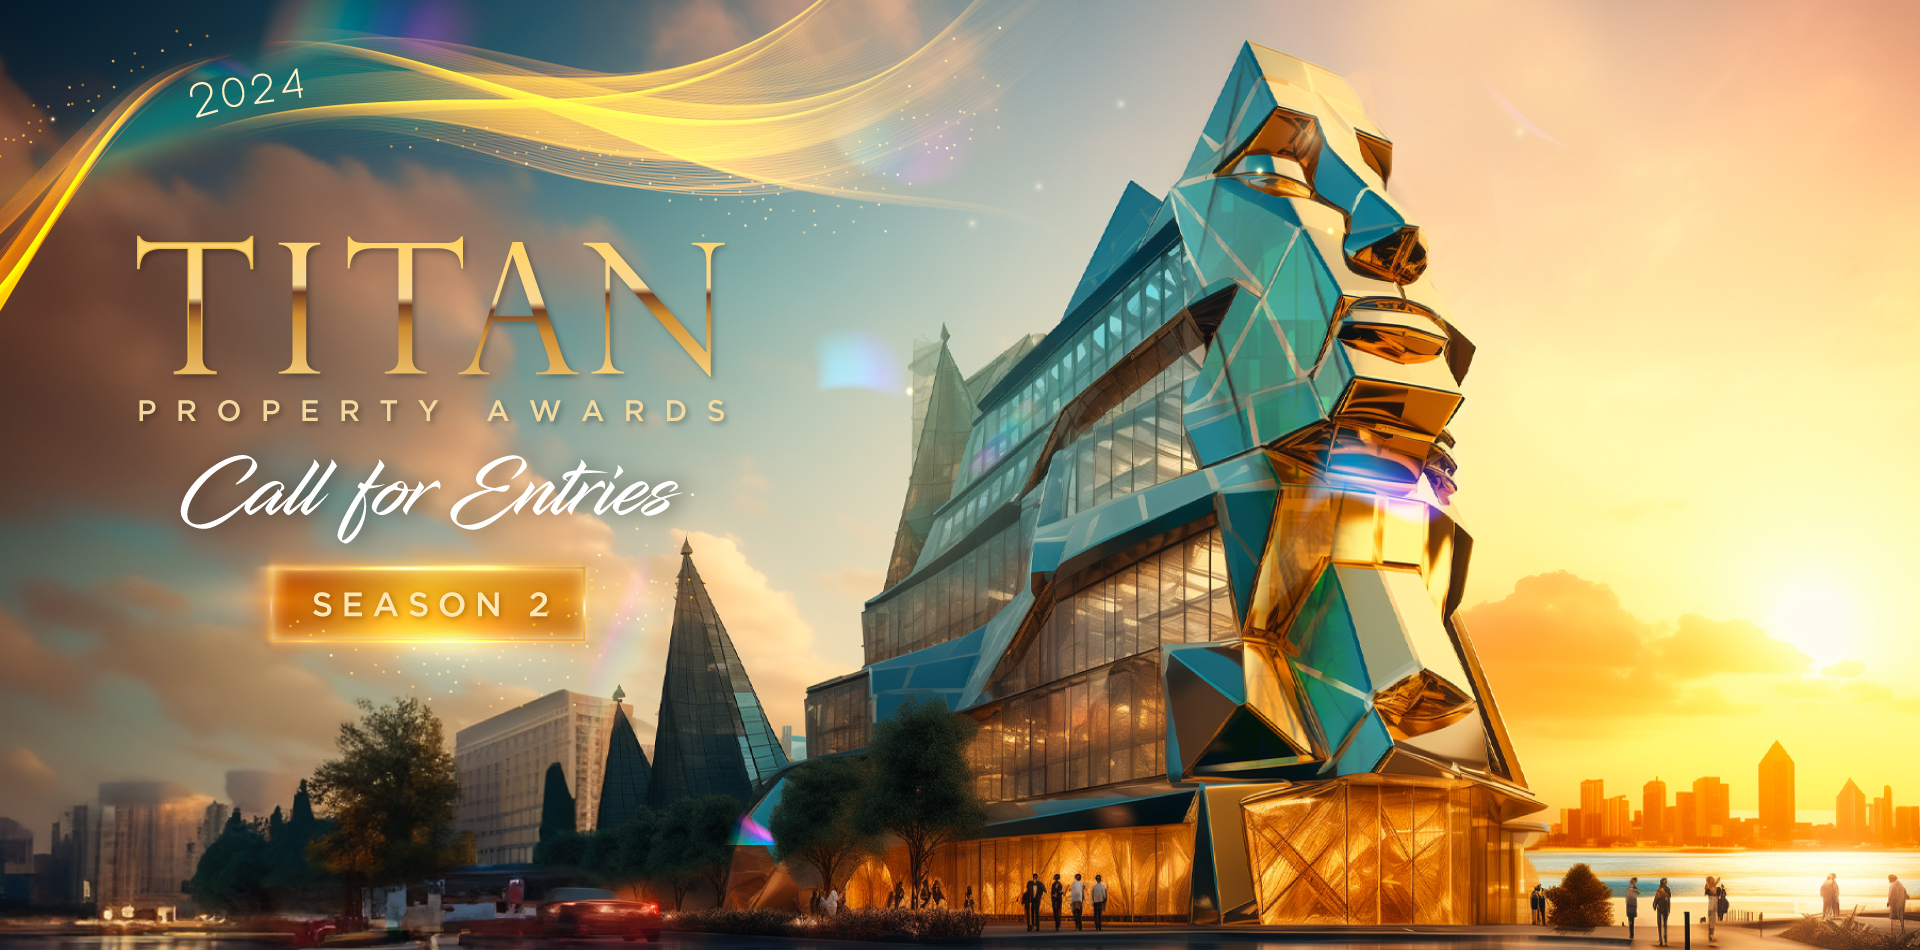 2024 TITAN Property Awards S2 Call for Entries!